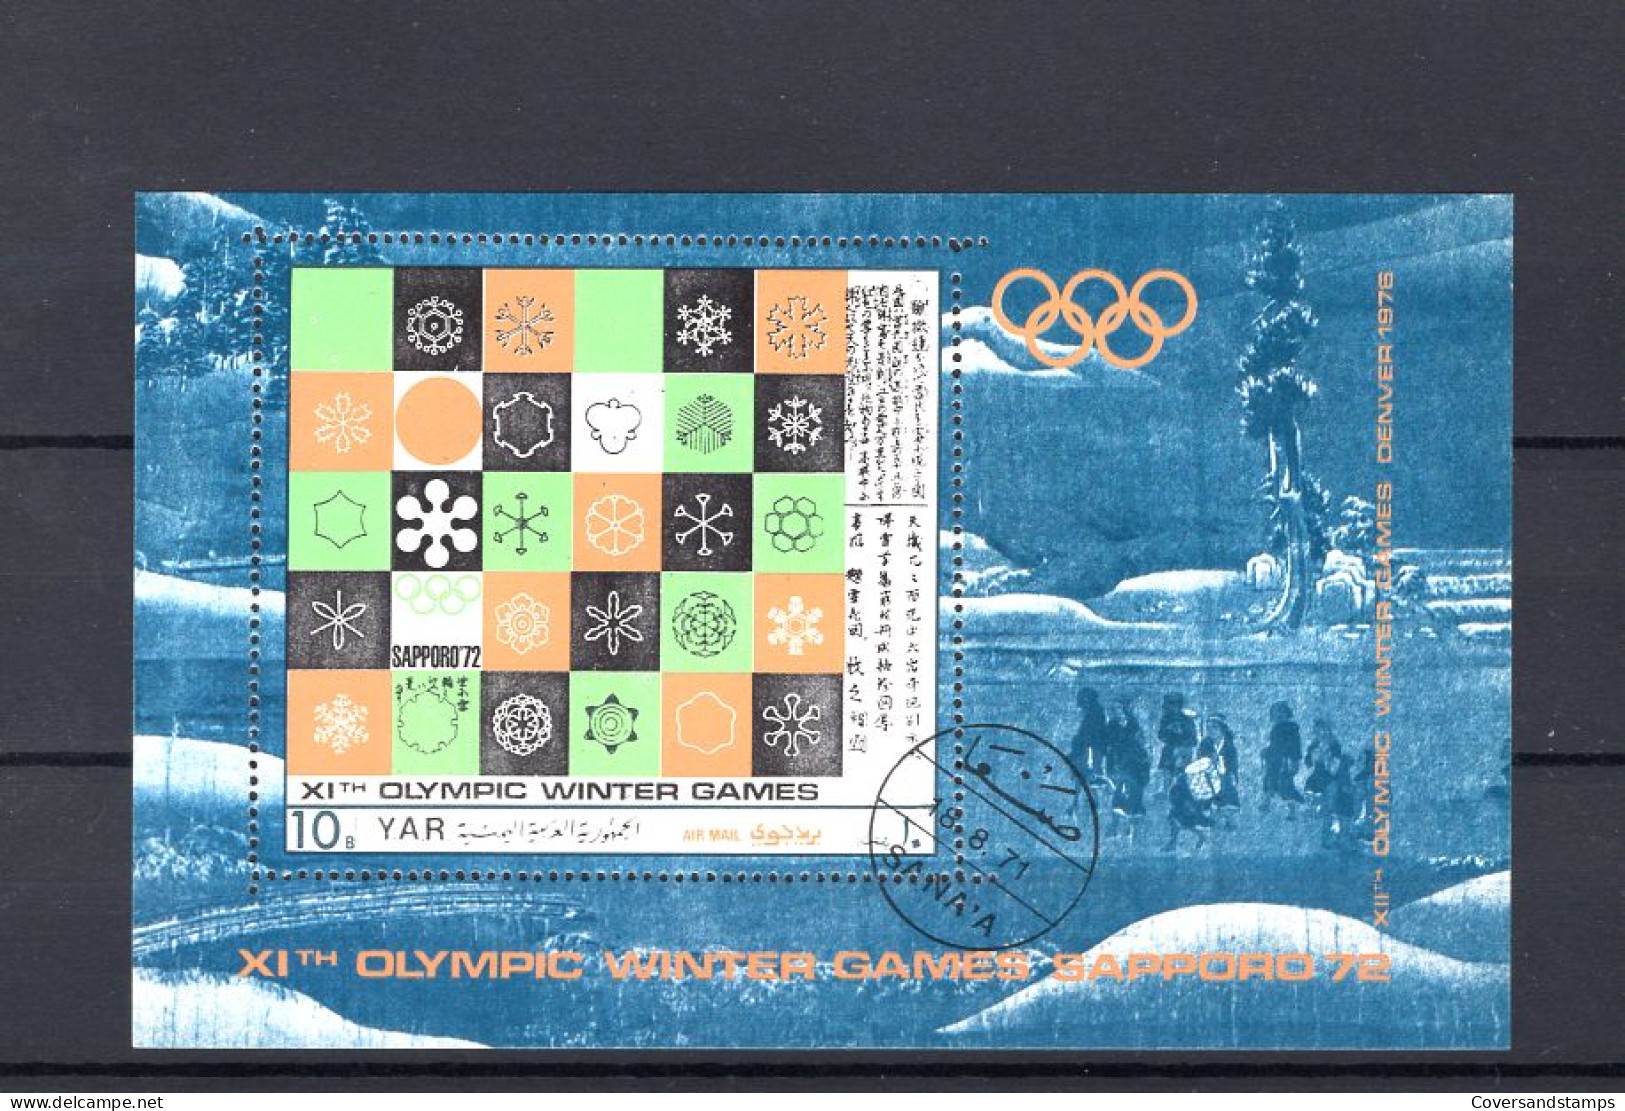  YAR - XIth Olympic Winter Games Sapporo - Inverno1972: Sapporo